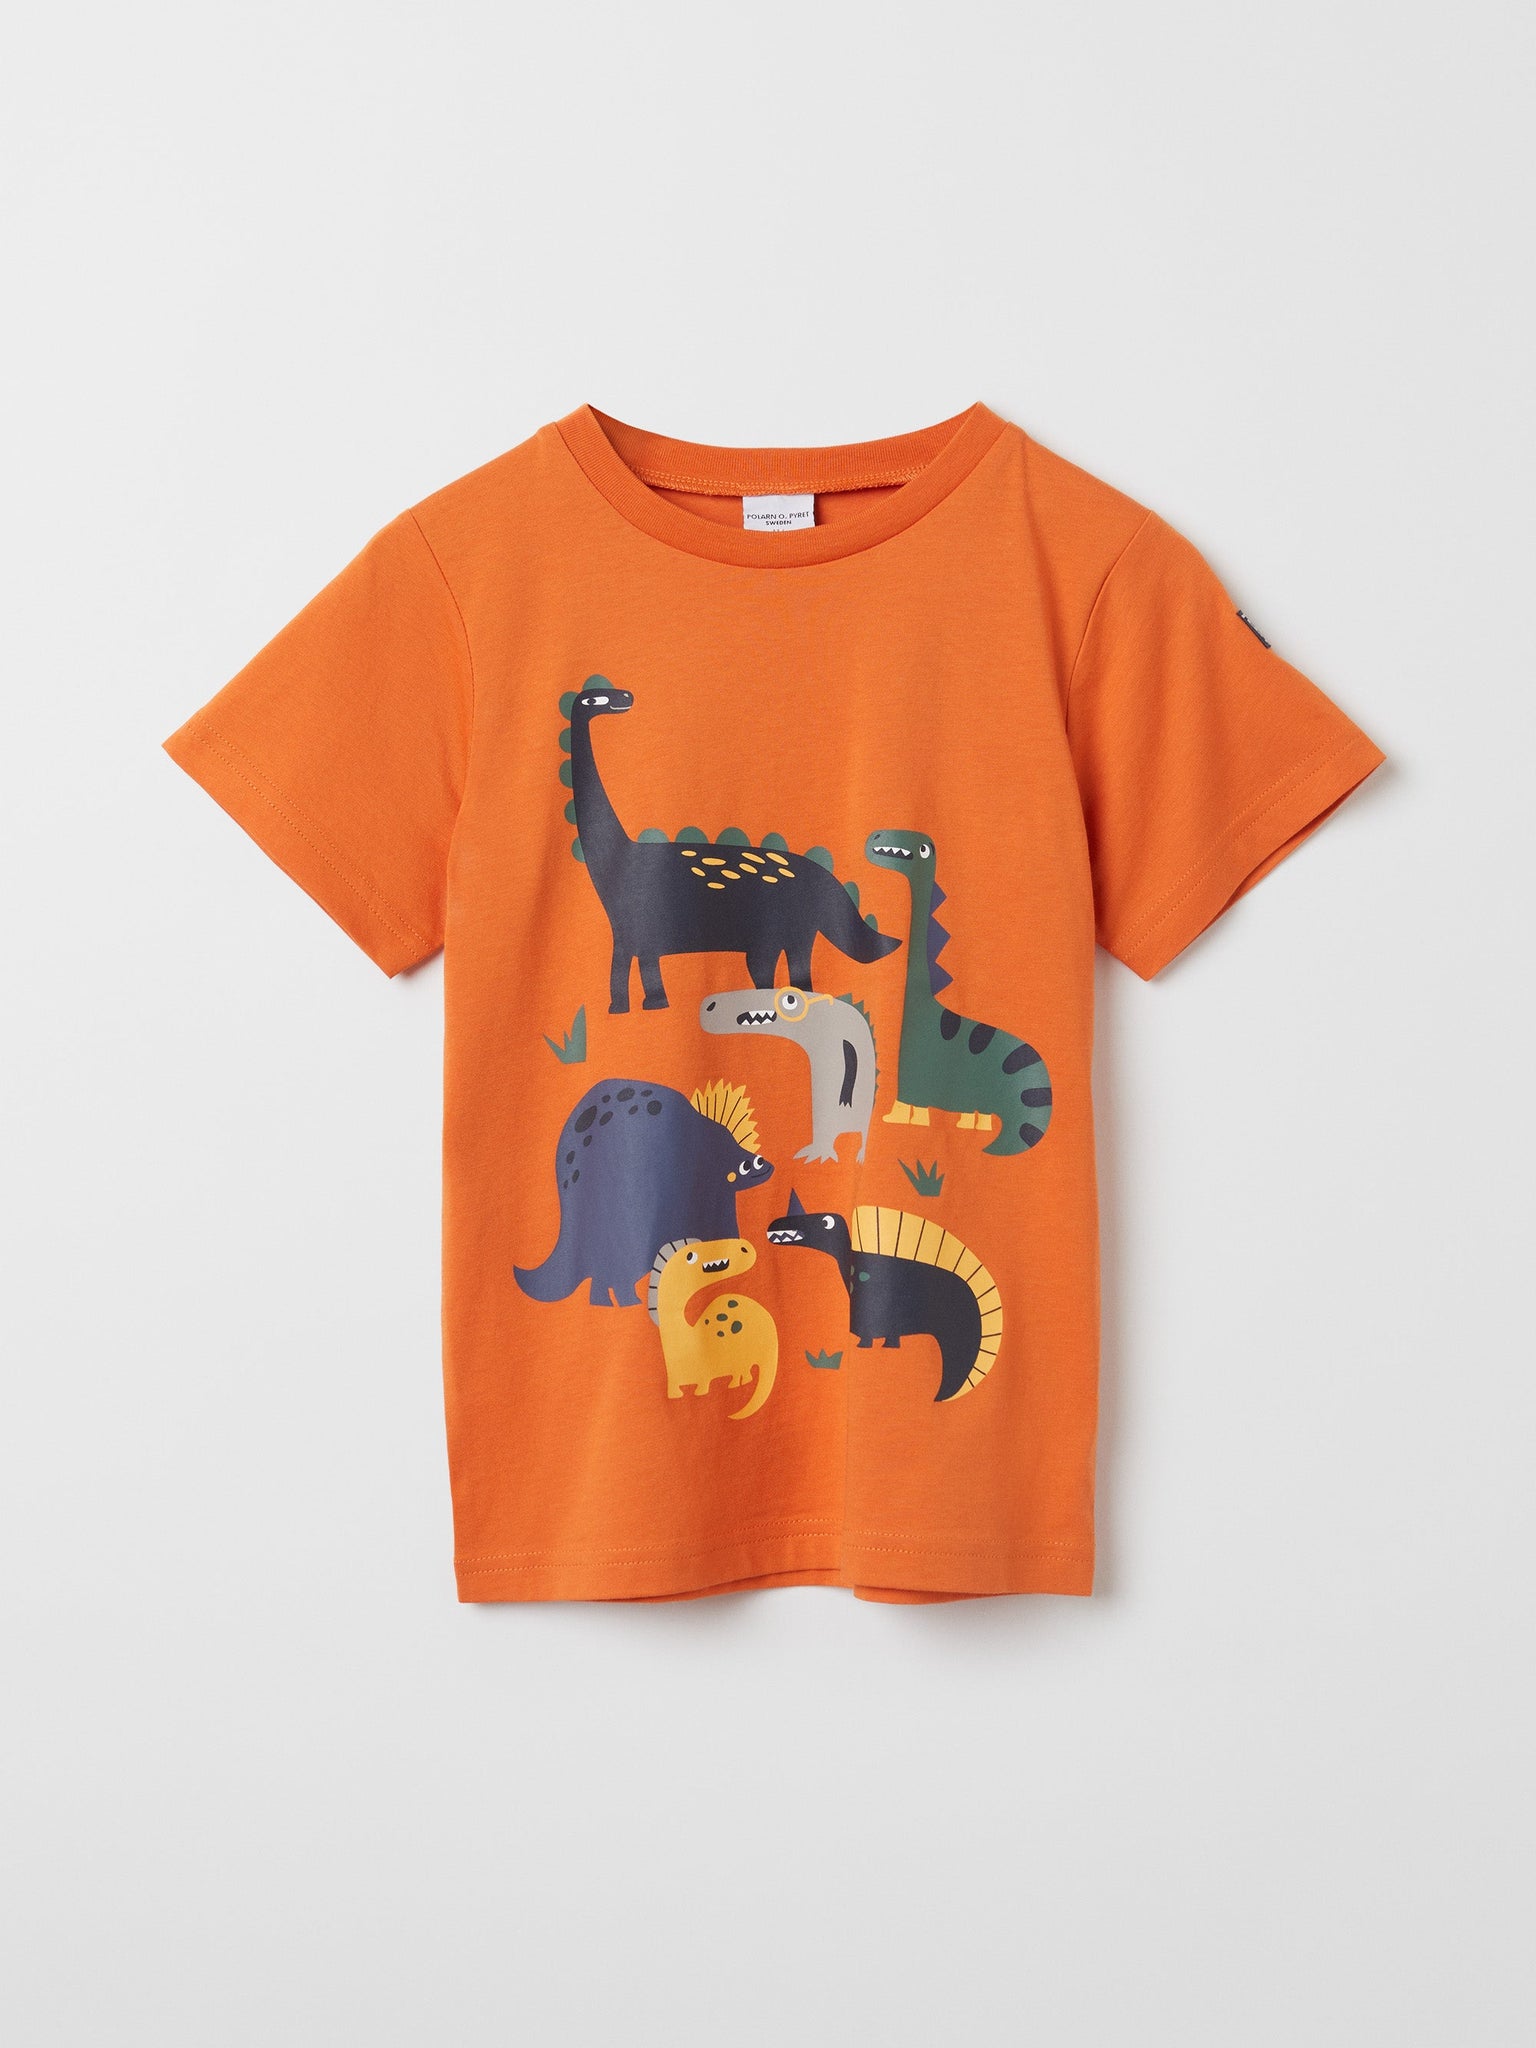 Organic Cotton Kids Dinosaur T-Shirt from the Polarn O. Pyret kidswear collection. Made using 100% GOTS Organic Cotton